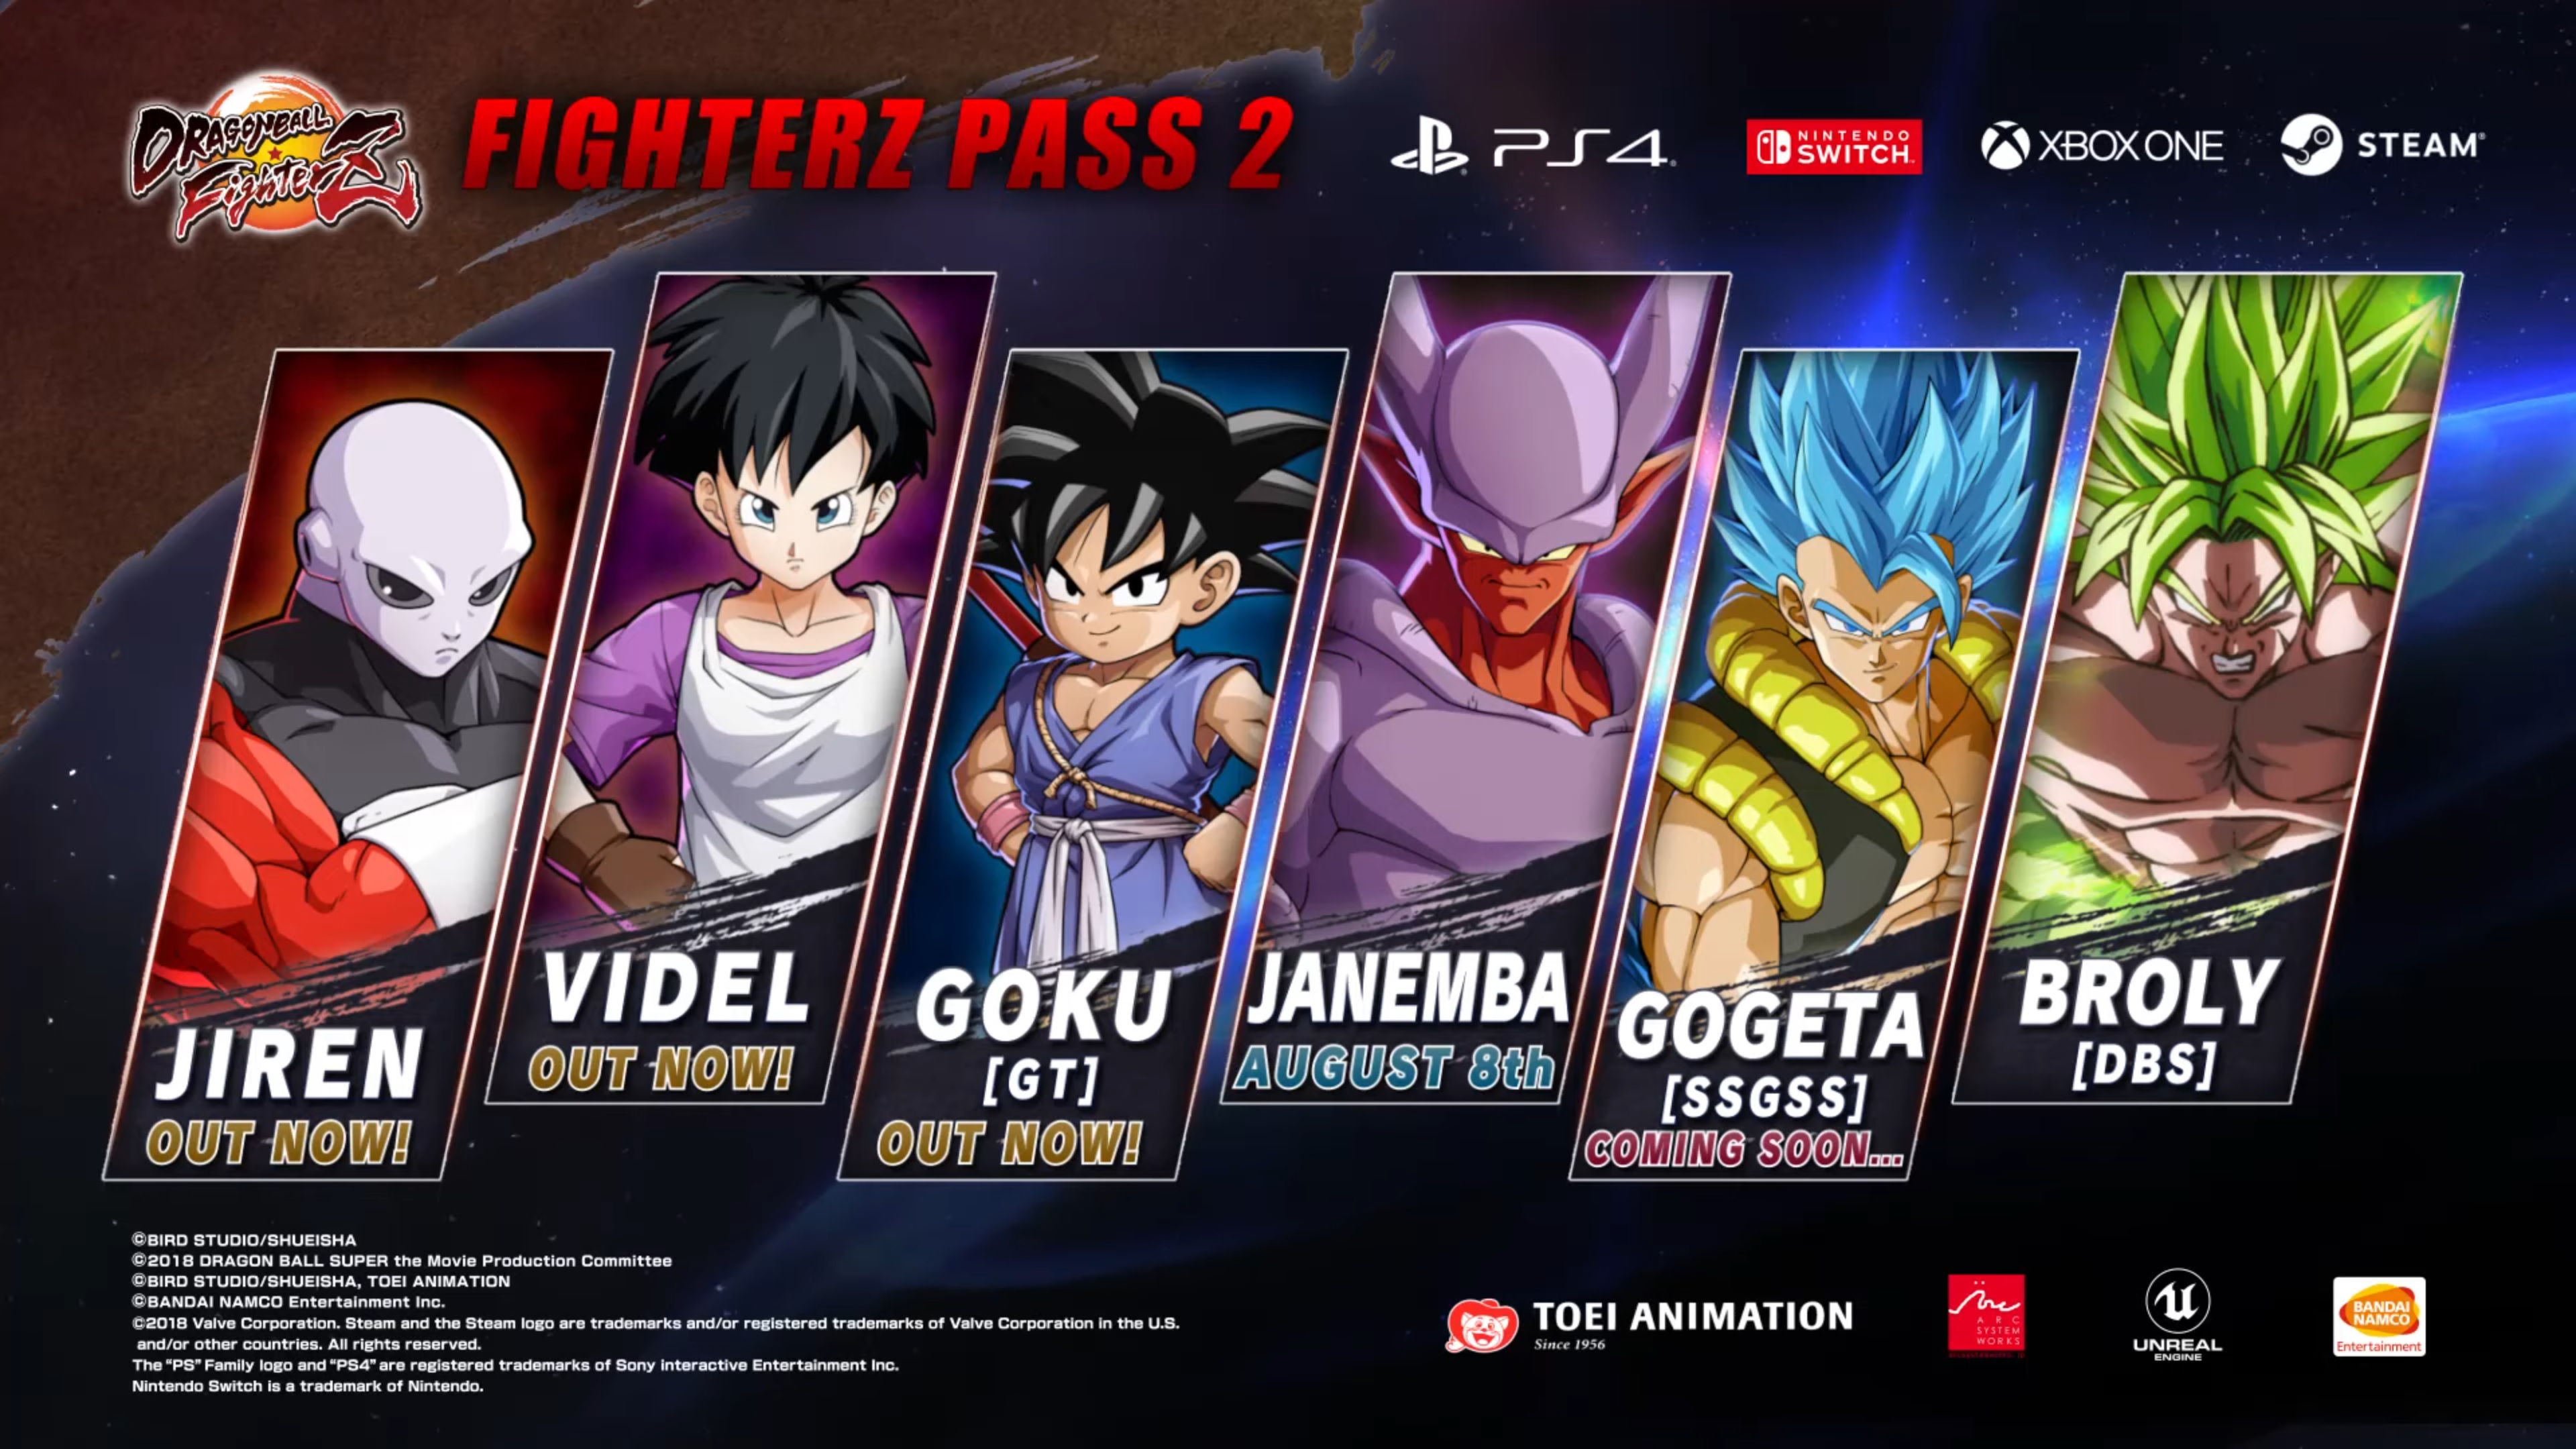 Dragon Ball FighterZ akan menambah Janemba pada 8 Agustus, diikuti oleh Gogeta (SSGSS) tidak lama setelah - Trailer gameplay